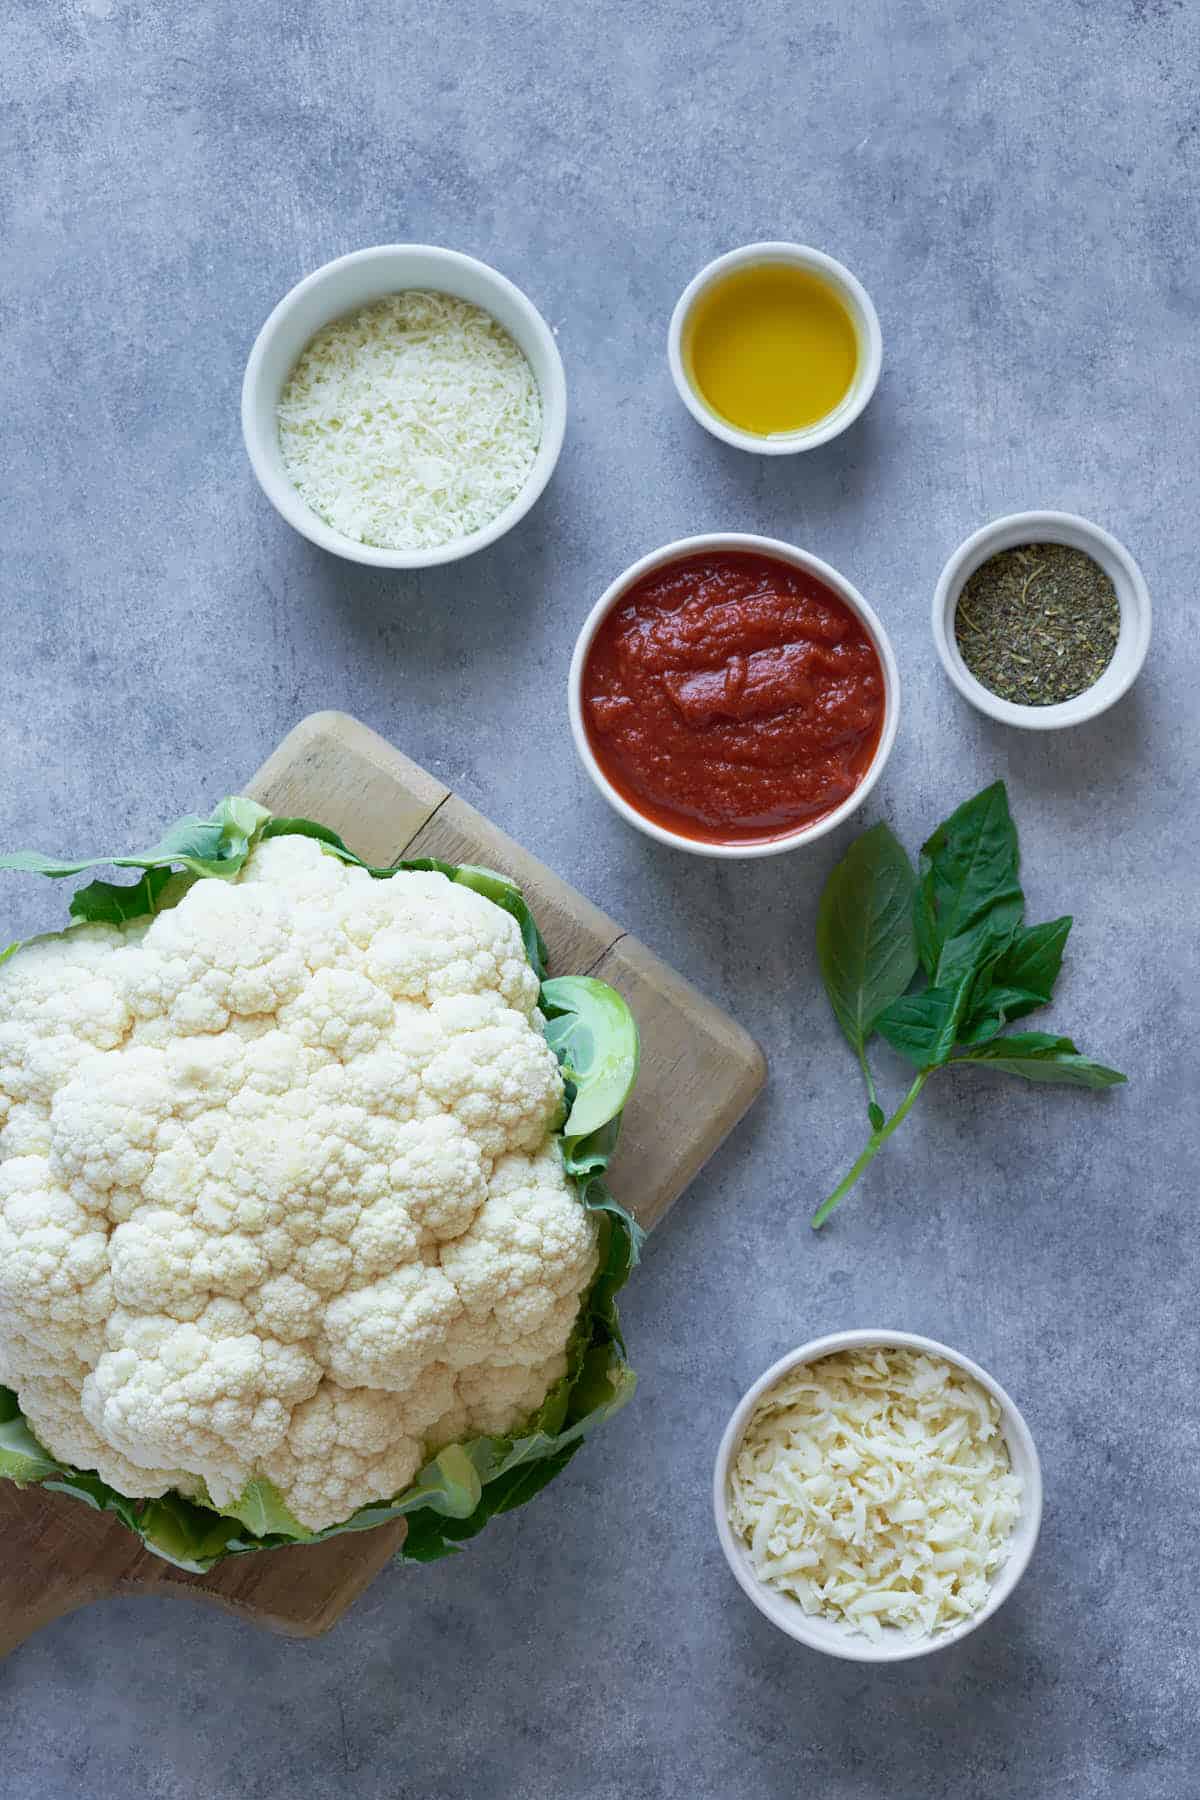 Ingredients to make air fryer cauliflower parmesan.